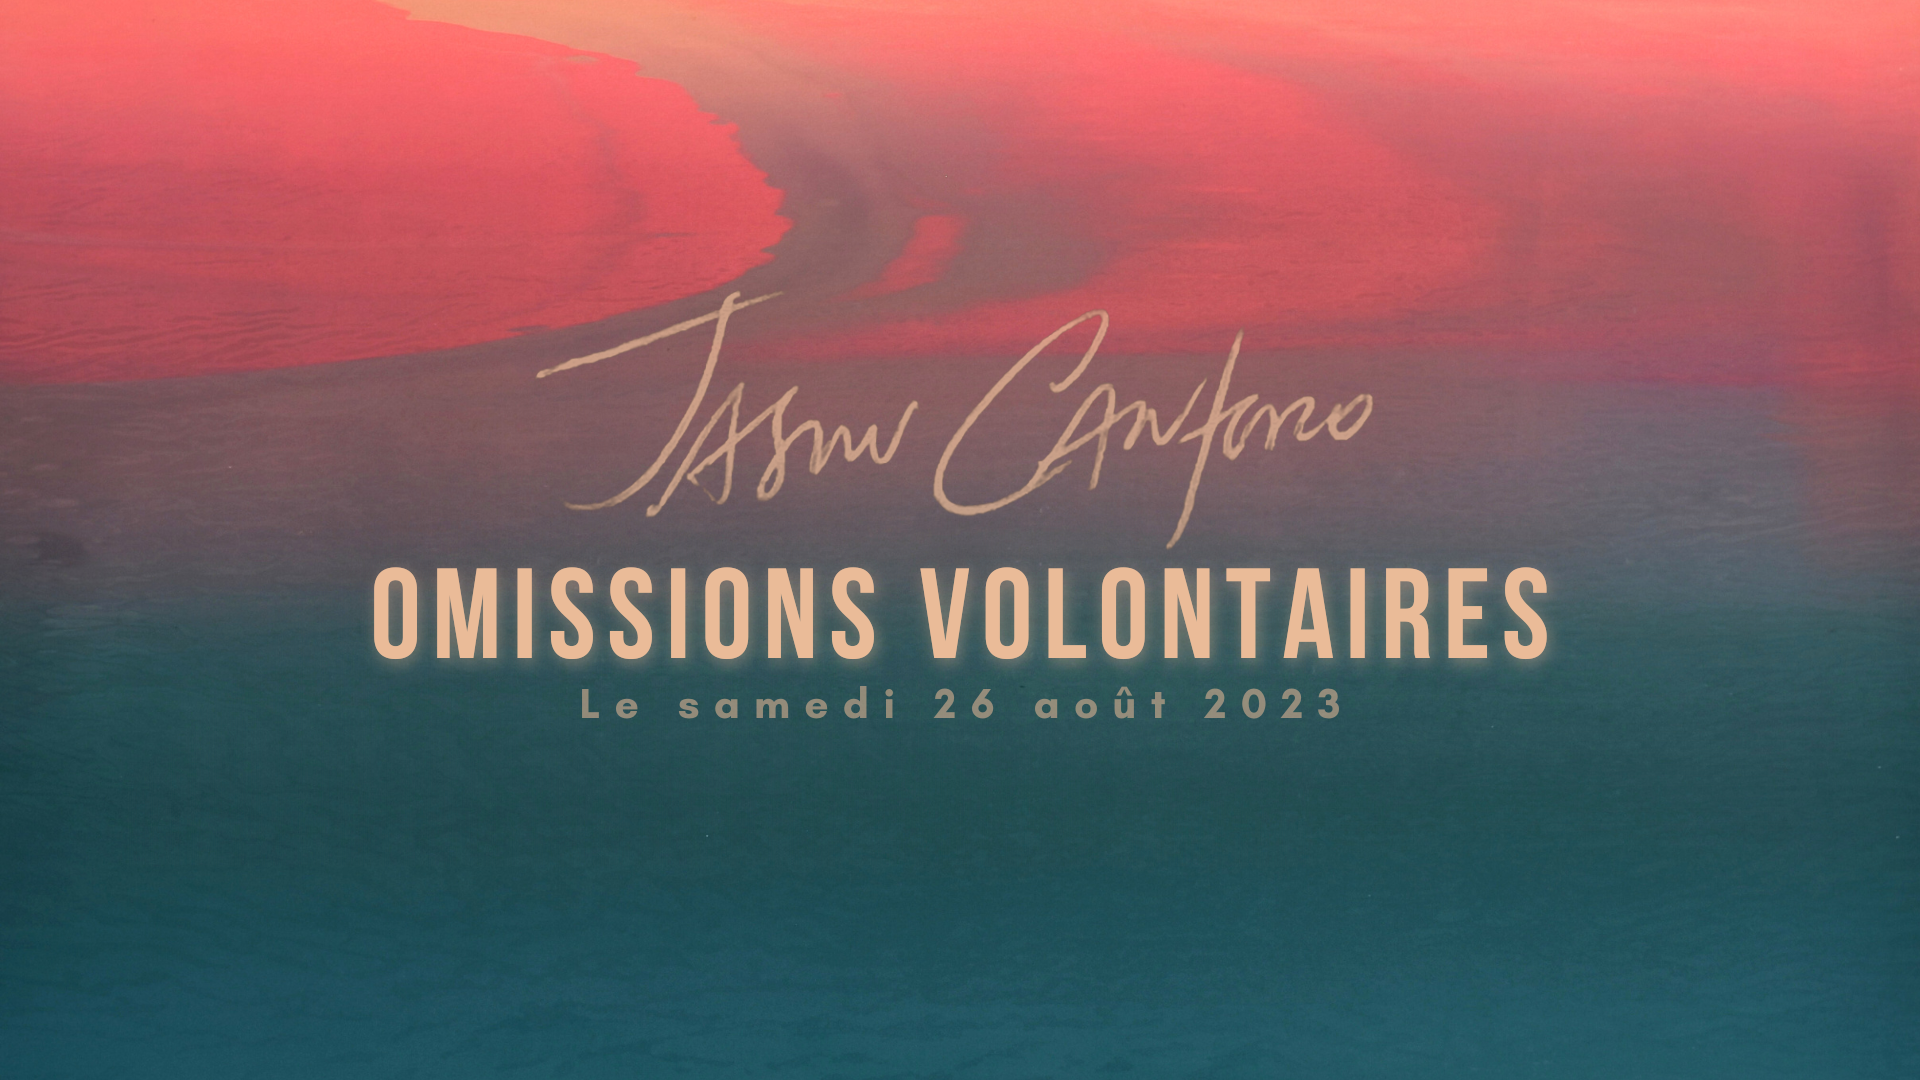 Omissions volontaires : Un solo de Jason Cantoro à Kamouraska